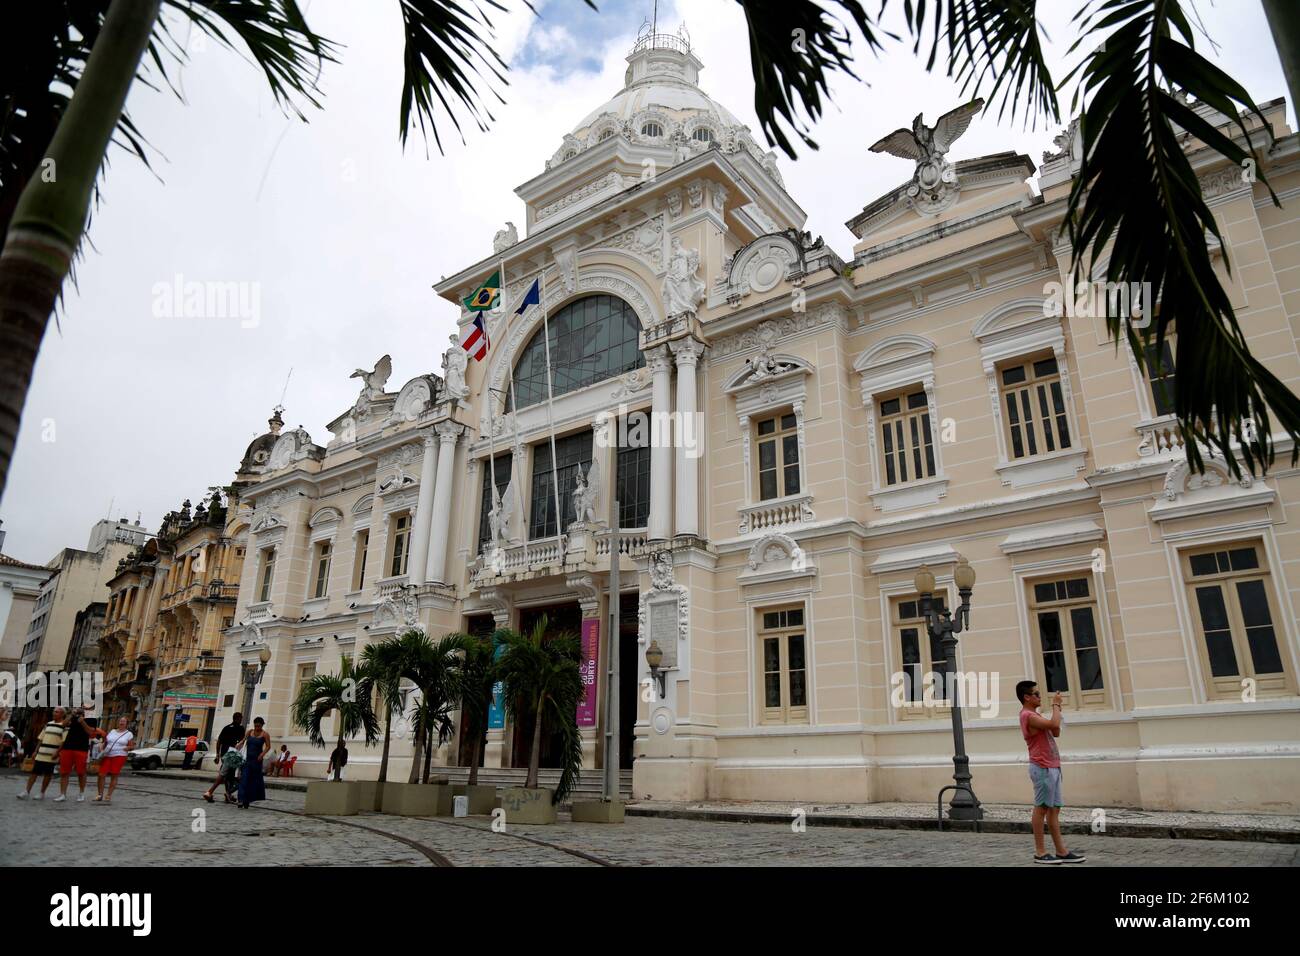 salvador, bahia / brasilien - 23. Mai 2015: Blick auf den Rio Branco Palast im historischen Zentrum der Stadt Salvador. Stockfoto